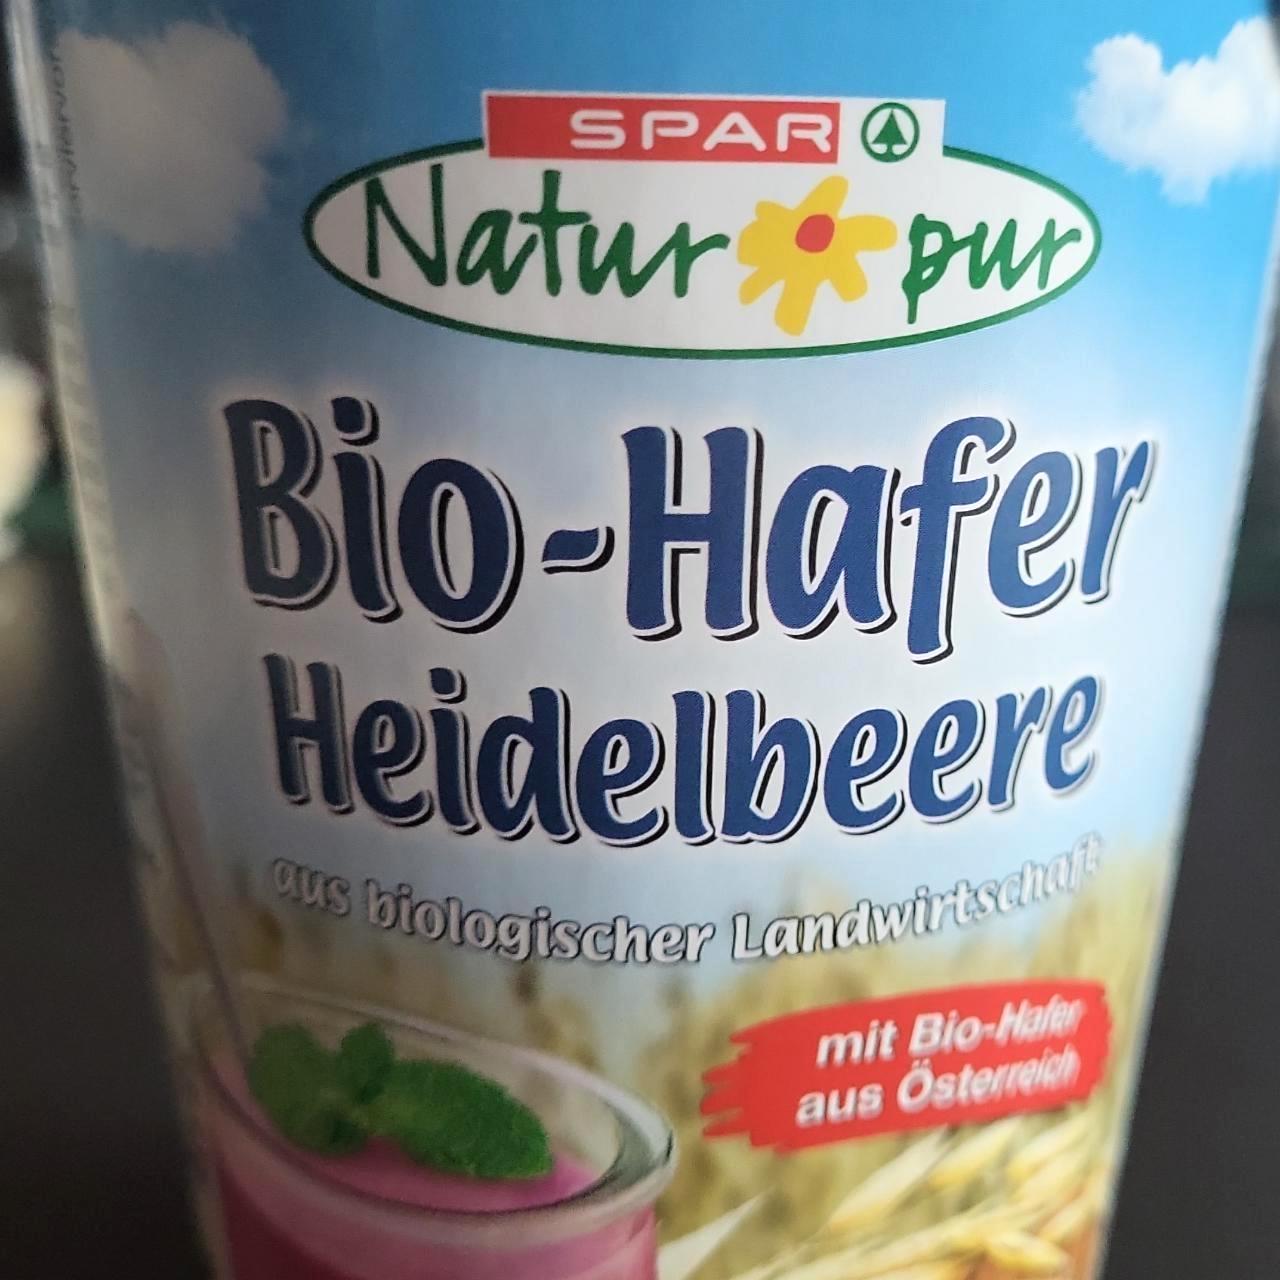 Képek - Bio-Hafer Heidelbeere joghurt Spar Natur pur